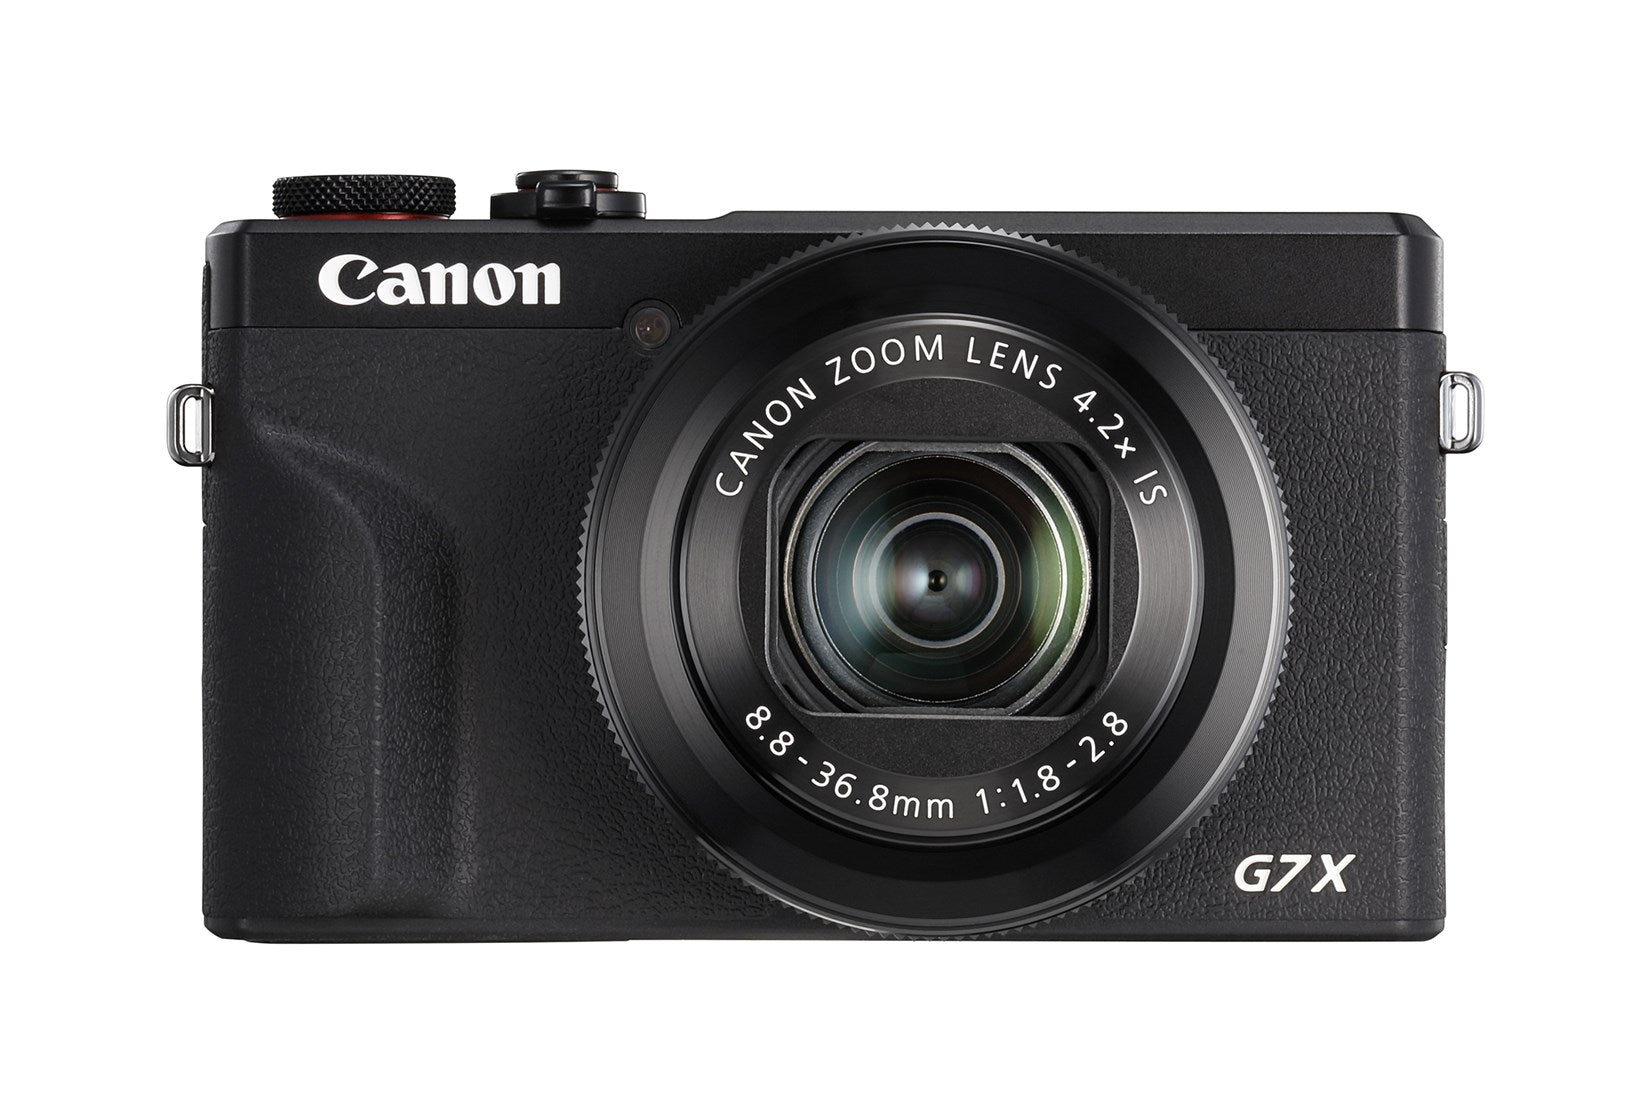 Product Image of Canon PowerShot G7X Mark III Camera - Black